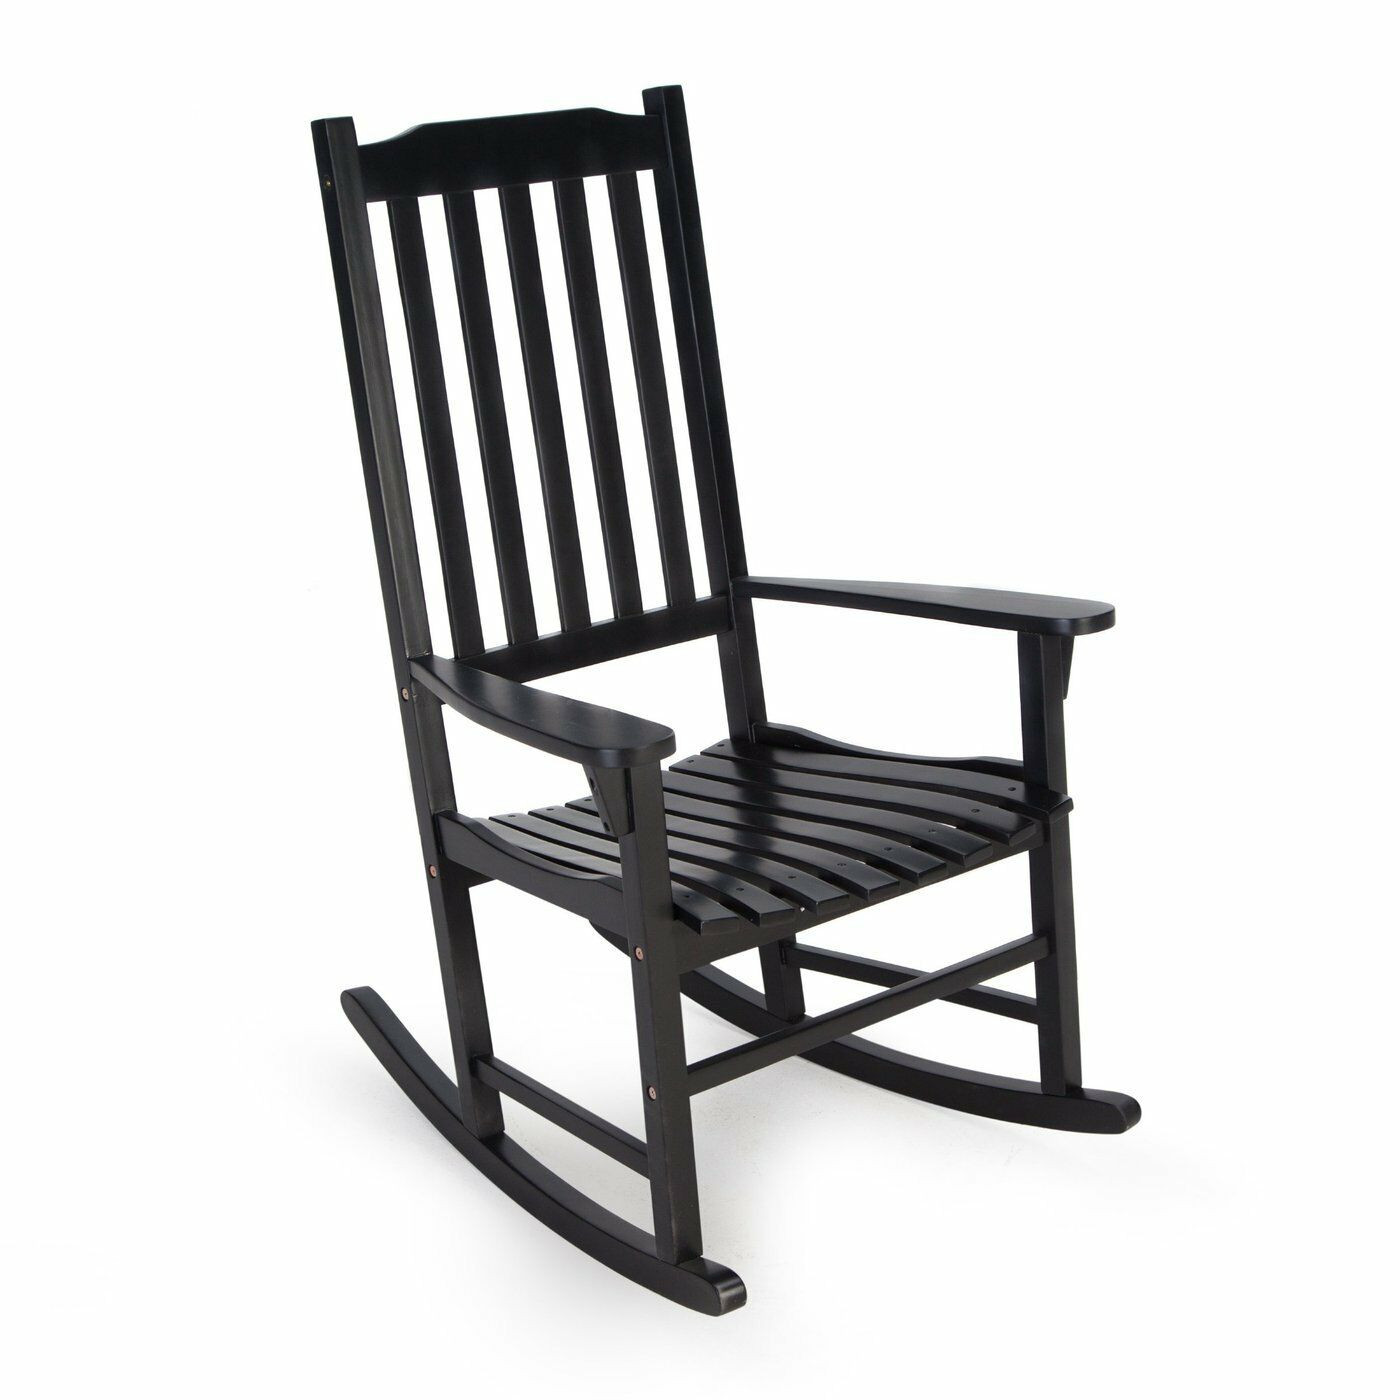 Best ideas about Outdoor Rocking Chairs
. Save or Pin Wood Rocking Chair Outdoor Indoor Patio Porch Deck Garden Now.